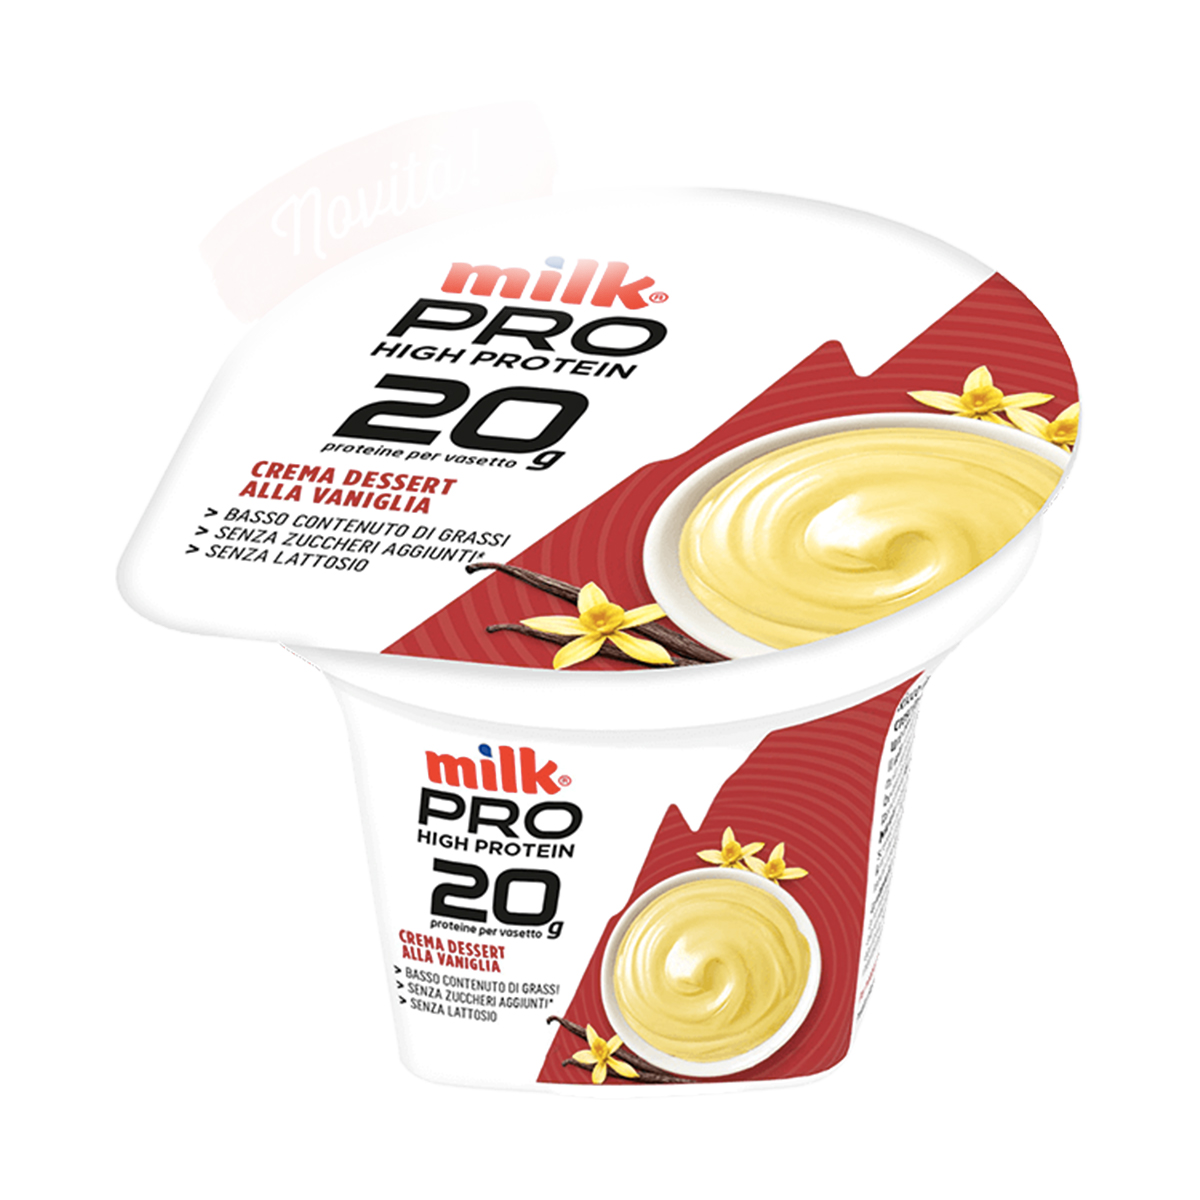 Milk Pro, High Protein Crema Dessert alla Vaniglia 200g